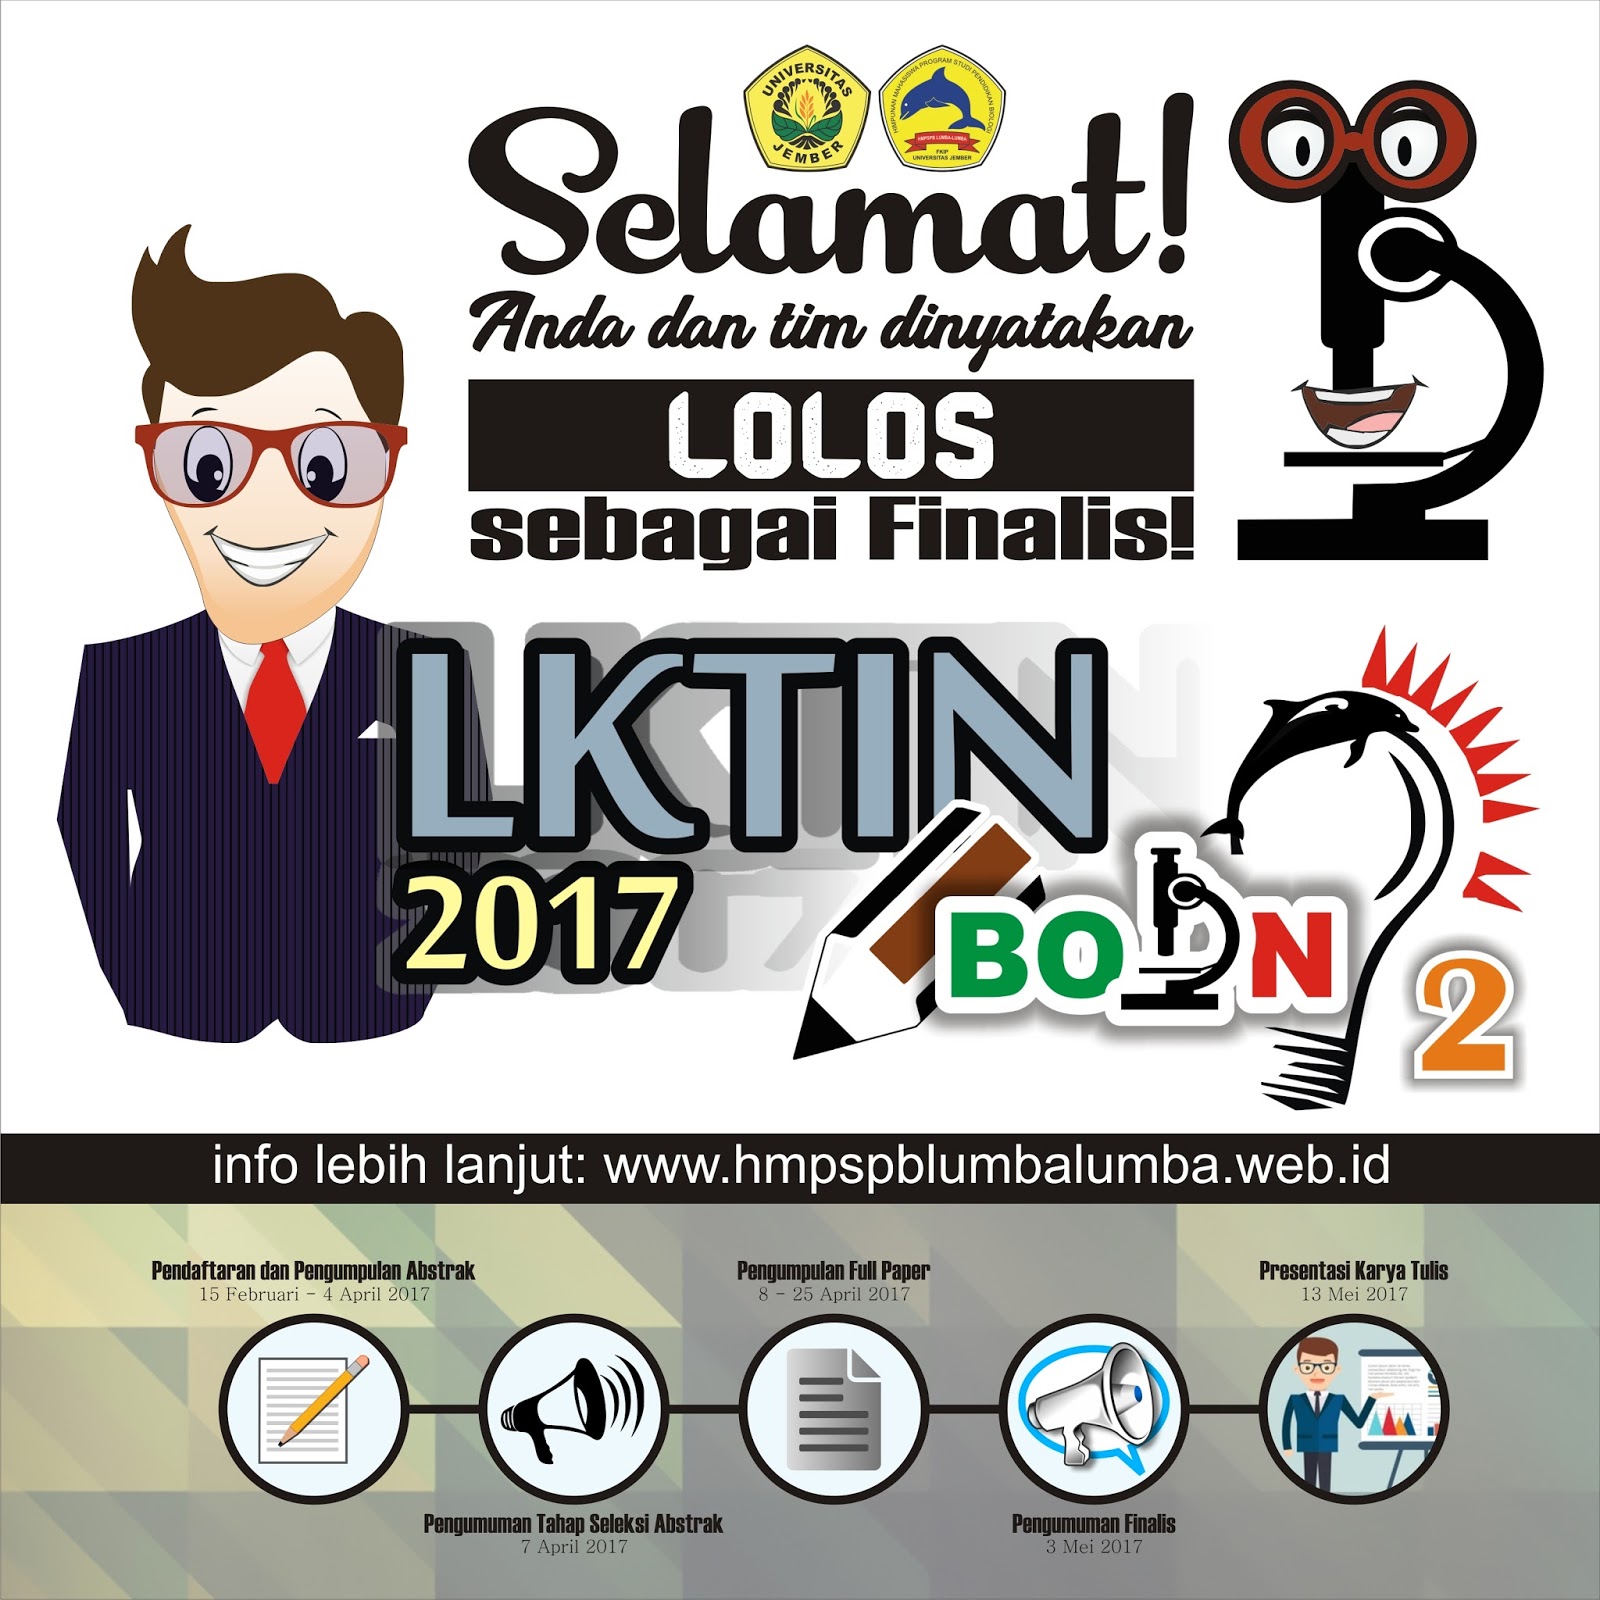 Pengumuman Finalis LKTIN BORN 2 tahun 2017 ~ HMPSP Biologi 